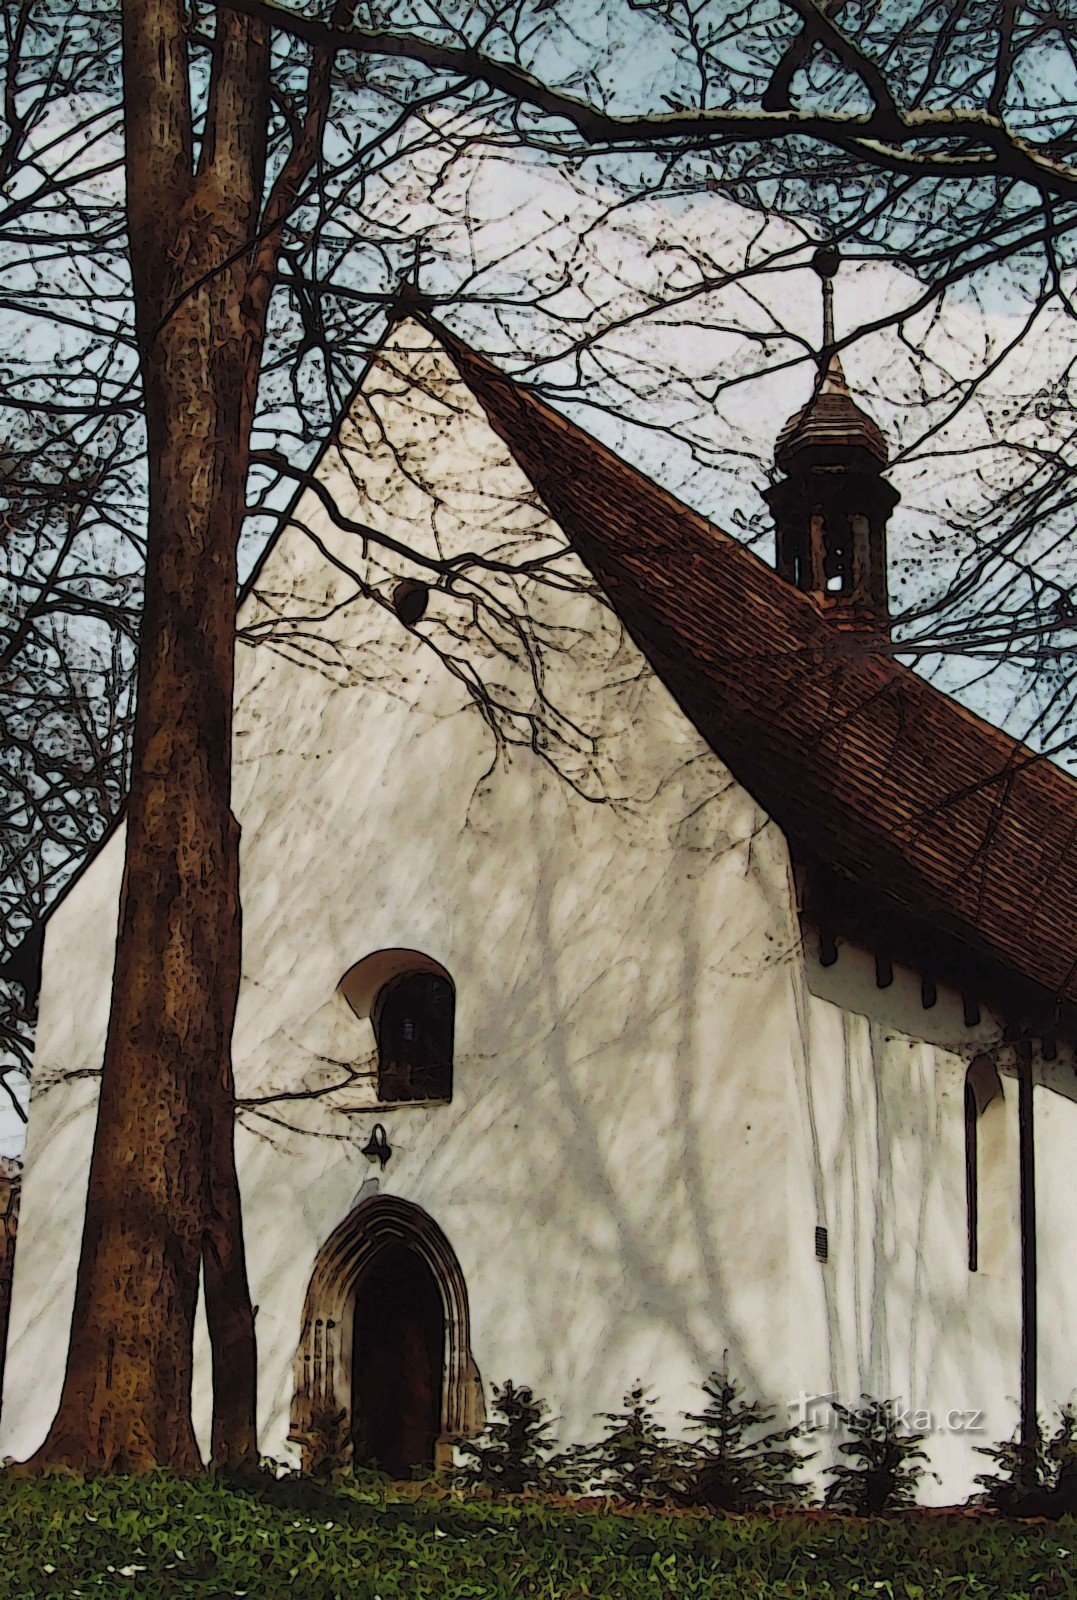 Valašské Meziříčí - Frumoasa biserică Sf. Iacob